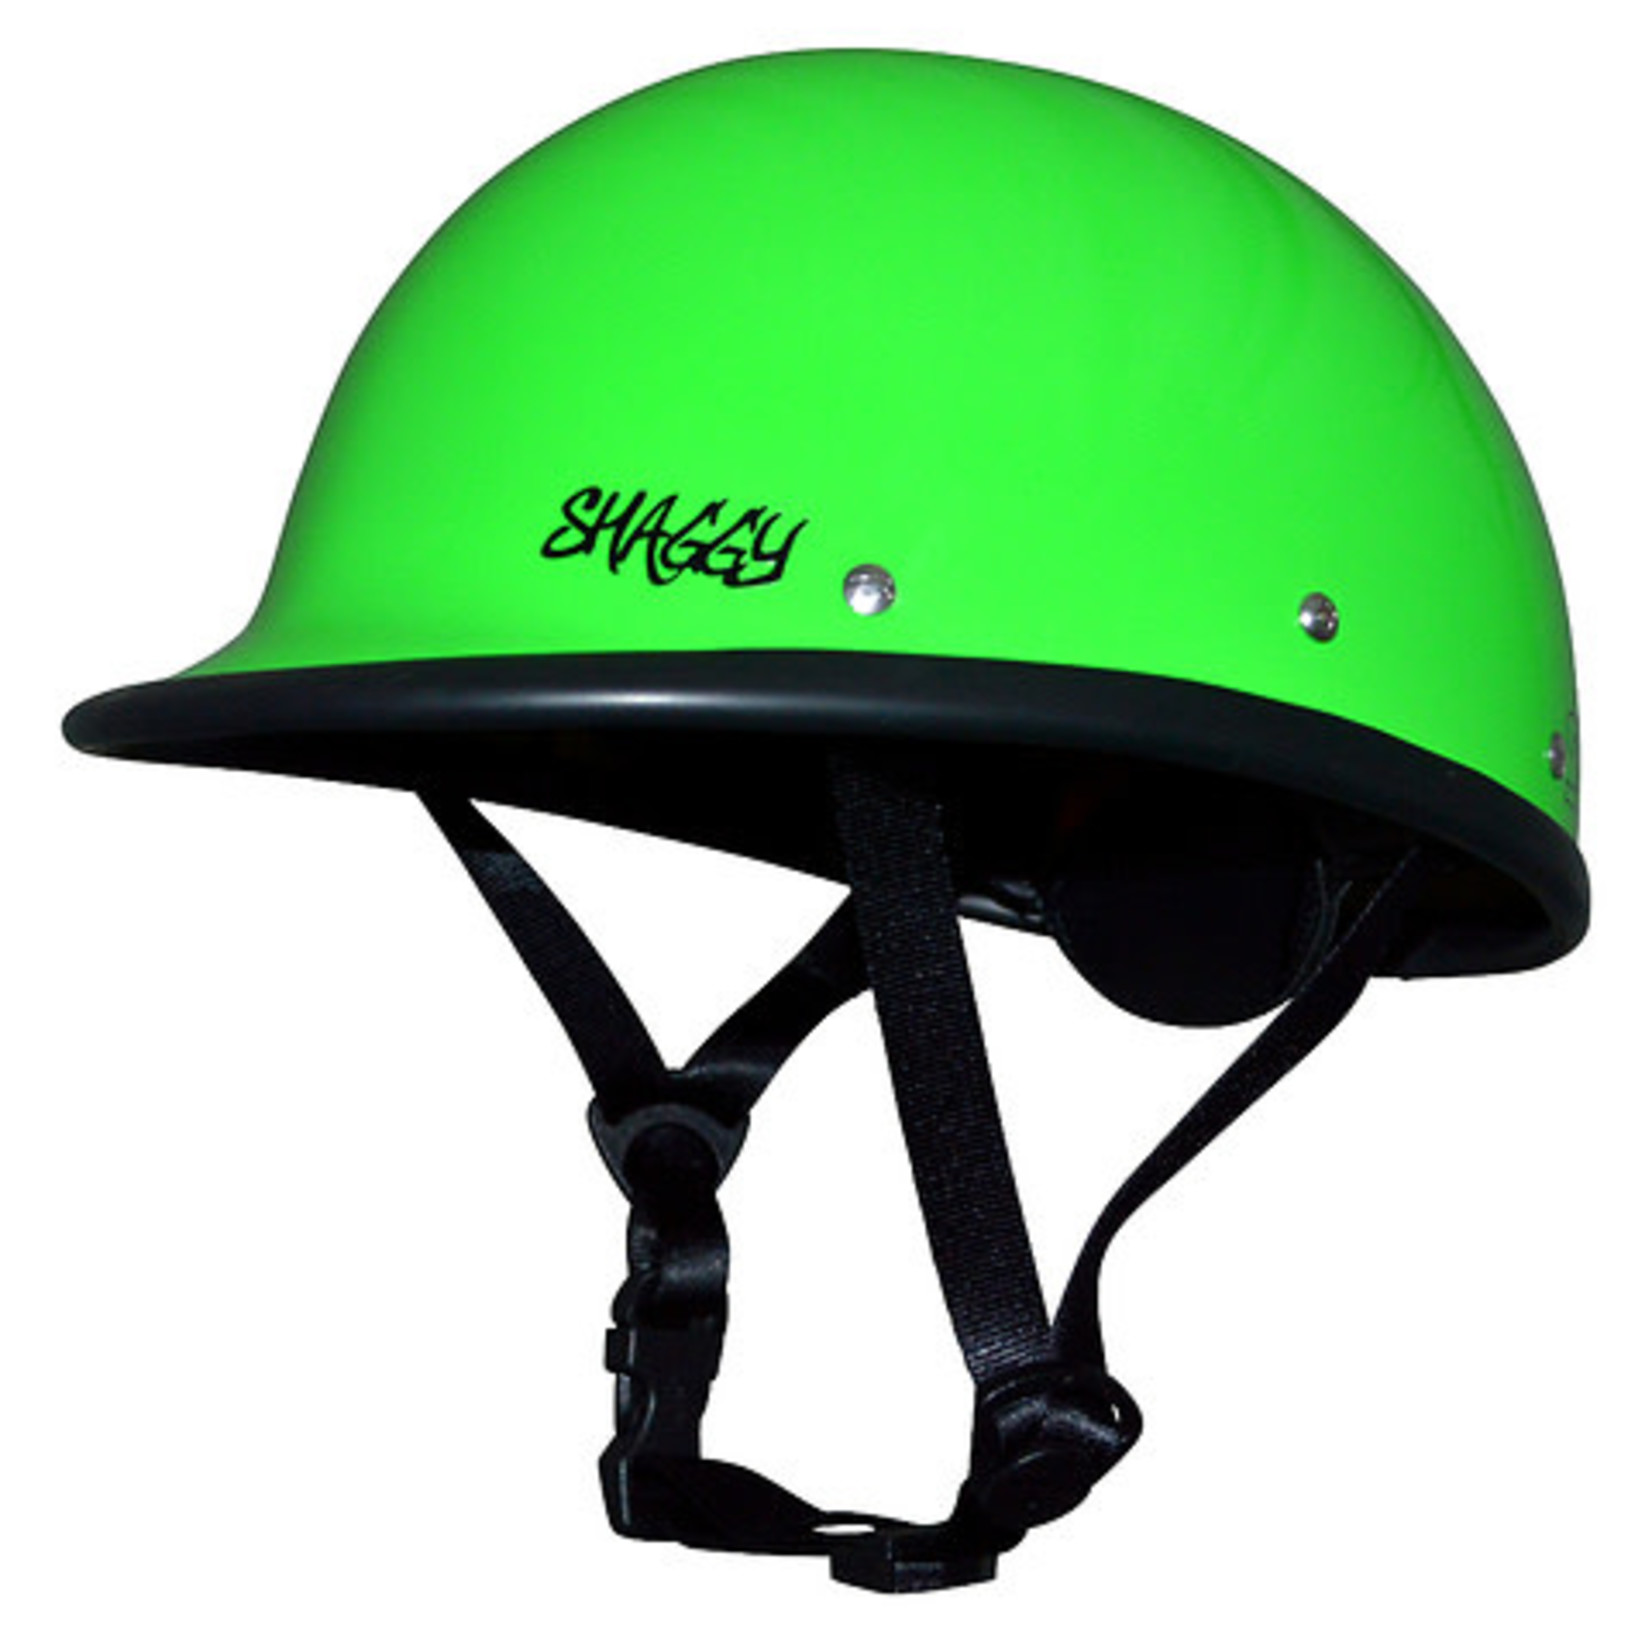 Shred Ready Shred Ready Shaggy Helmet